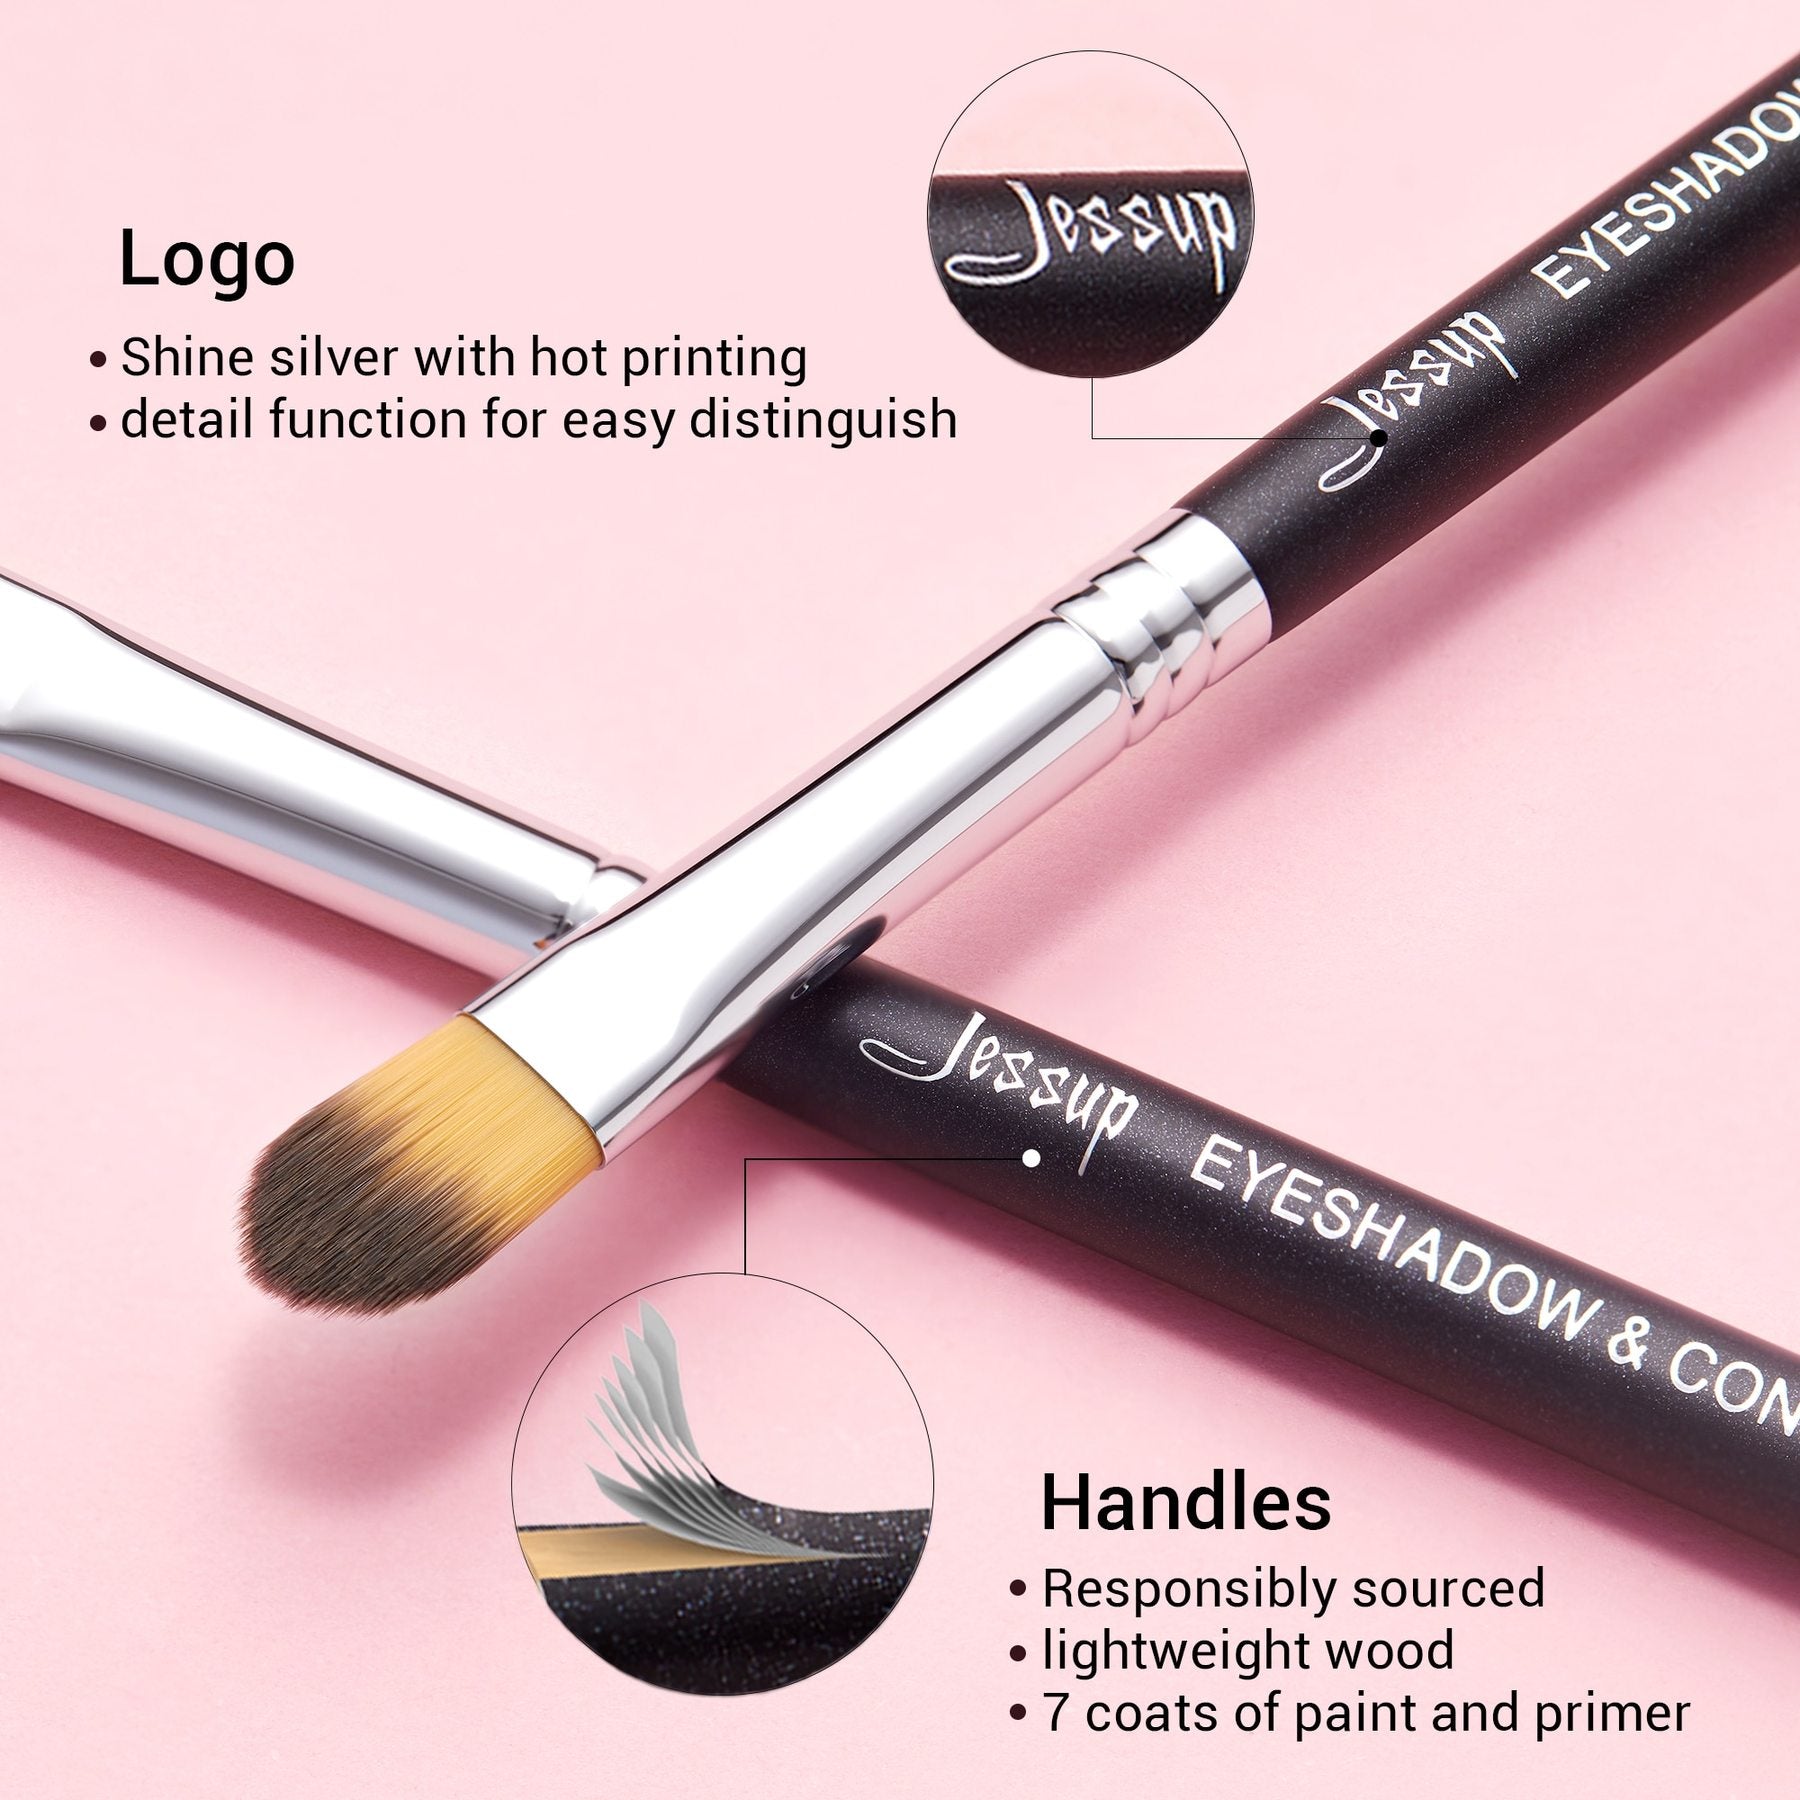 Professional 10PCS Eye Makeup Brush Set with A Cosmetic Bag